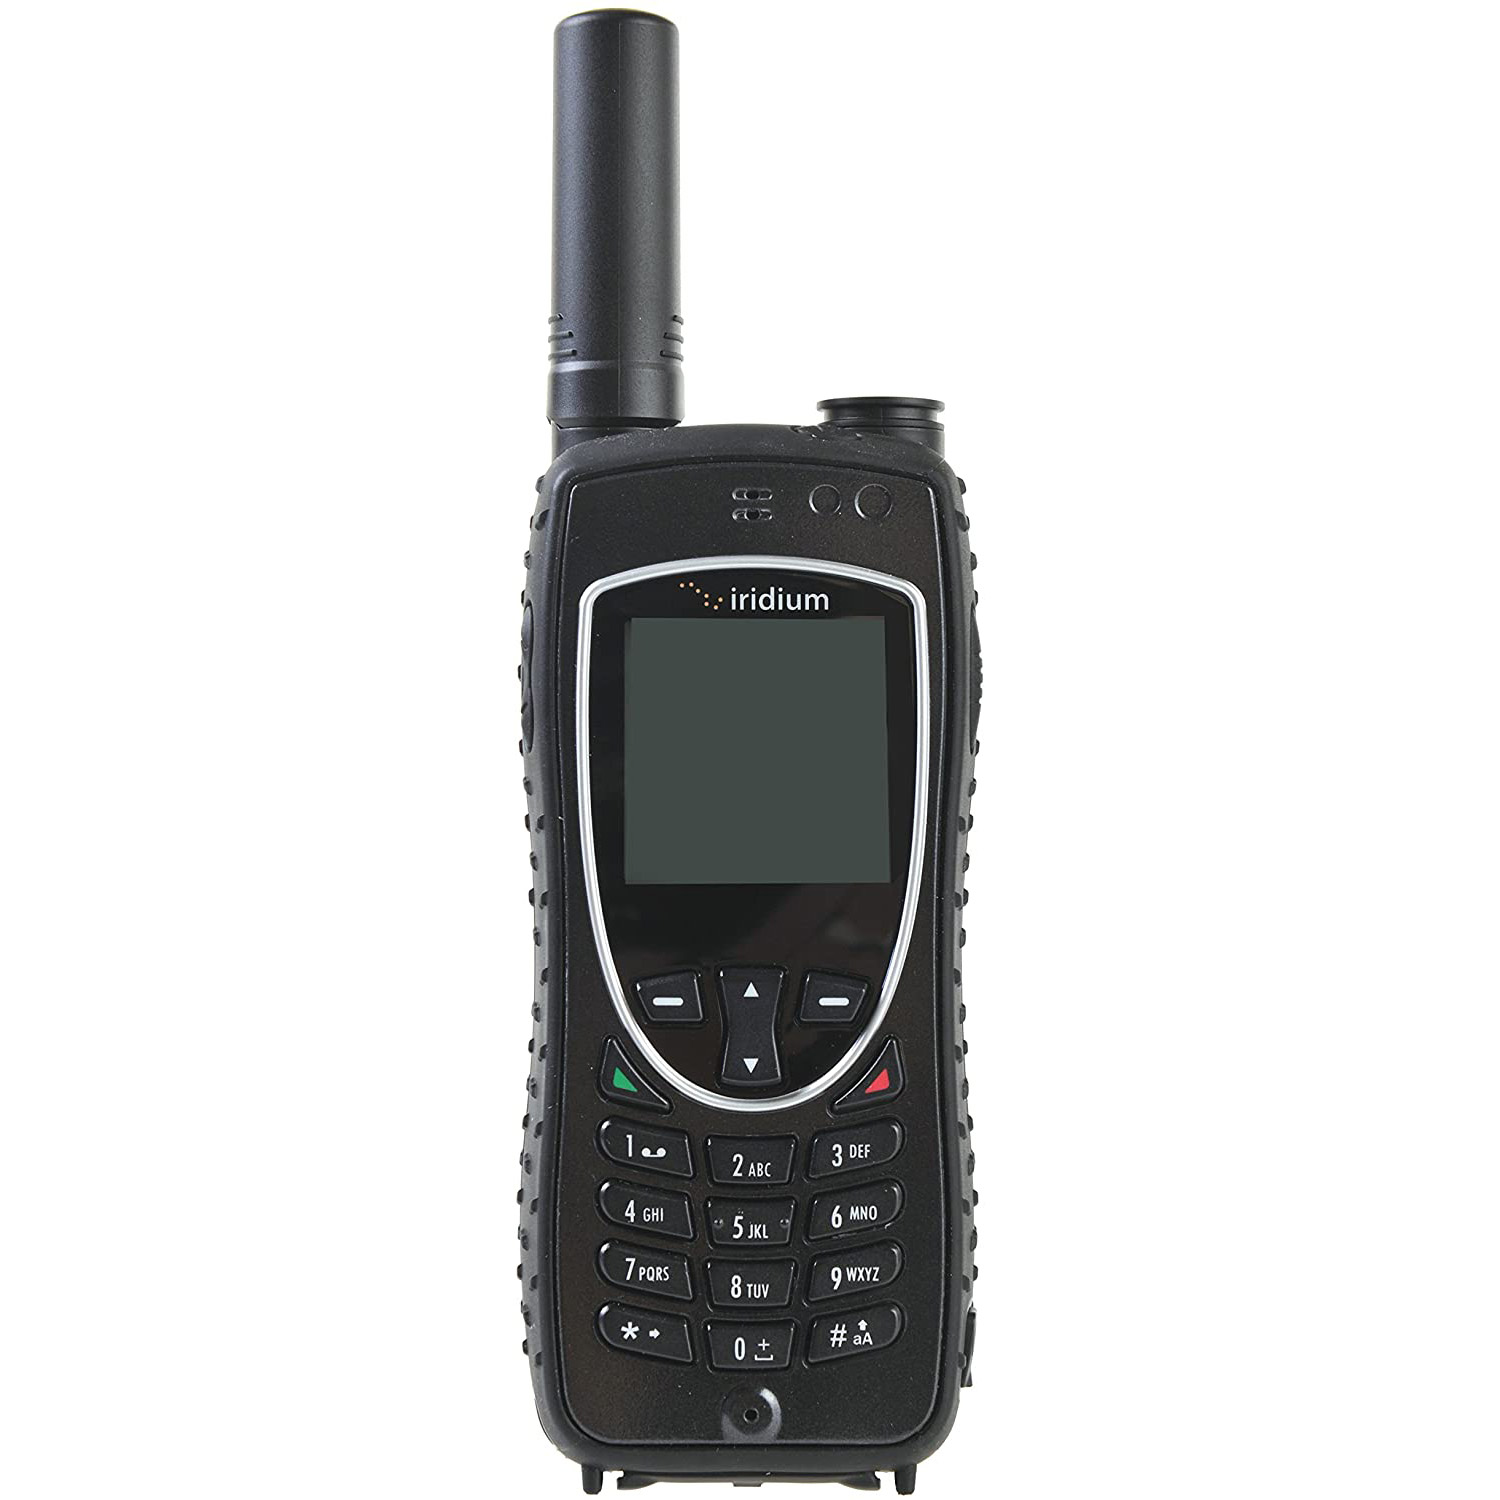 Product Review: Iridium Extreme 9575 Satellite Phone - eWEEK